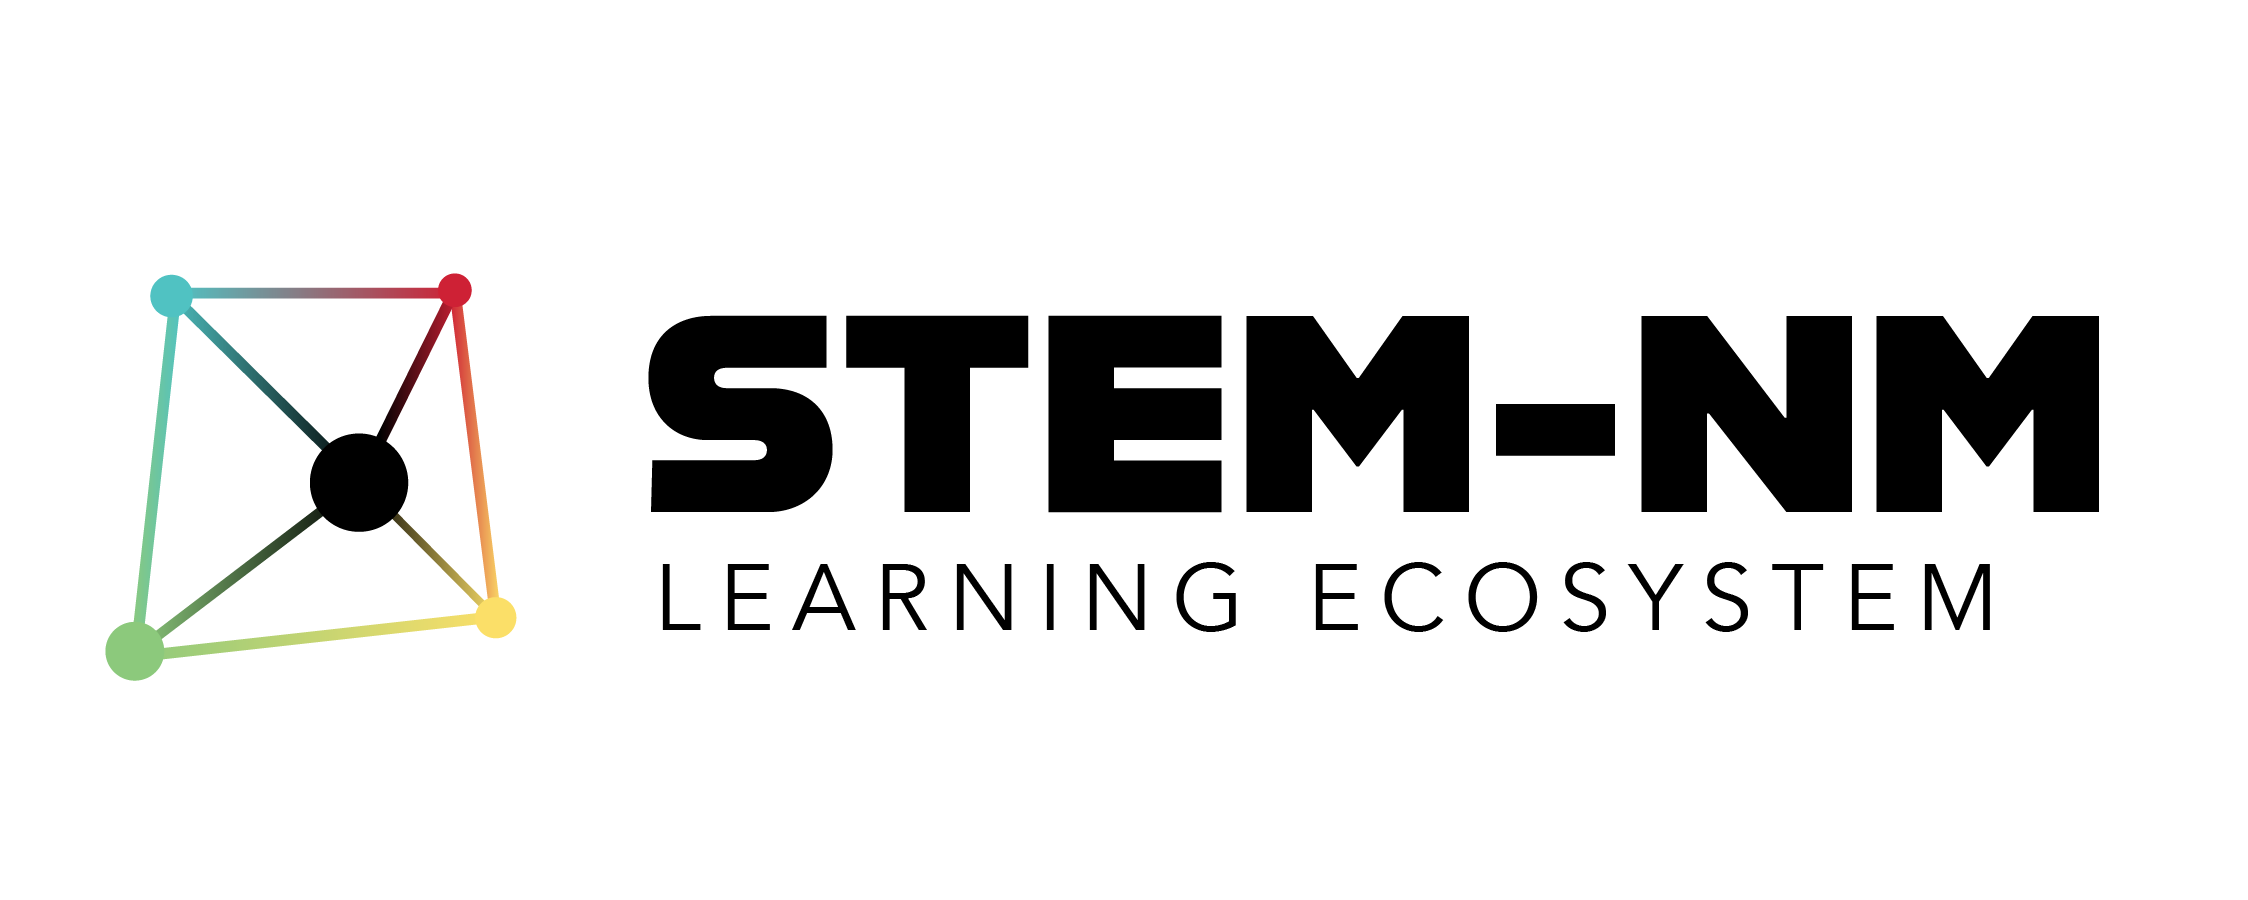 STEM-NM Ecosystem logo